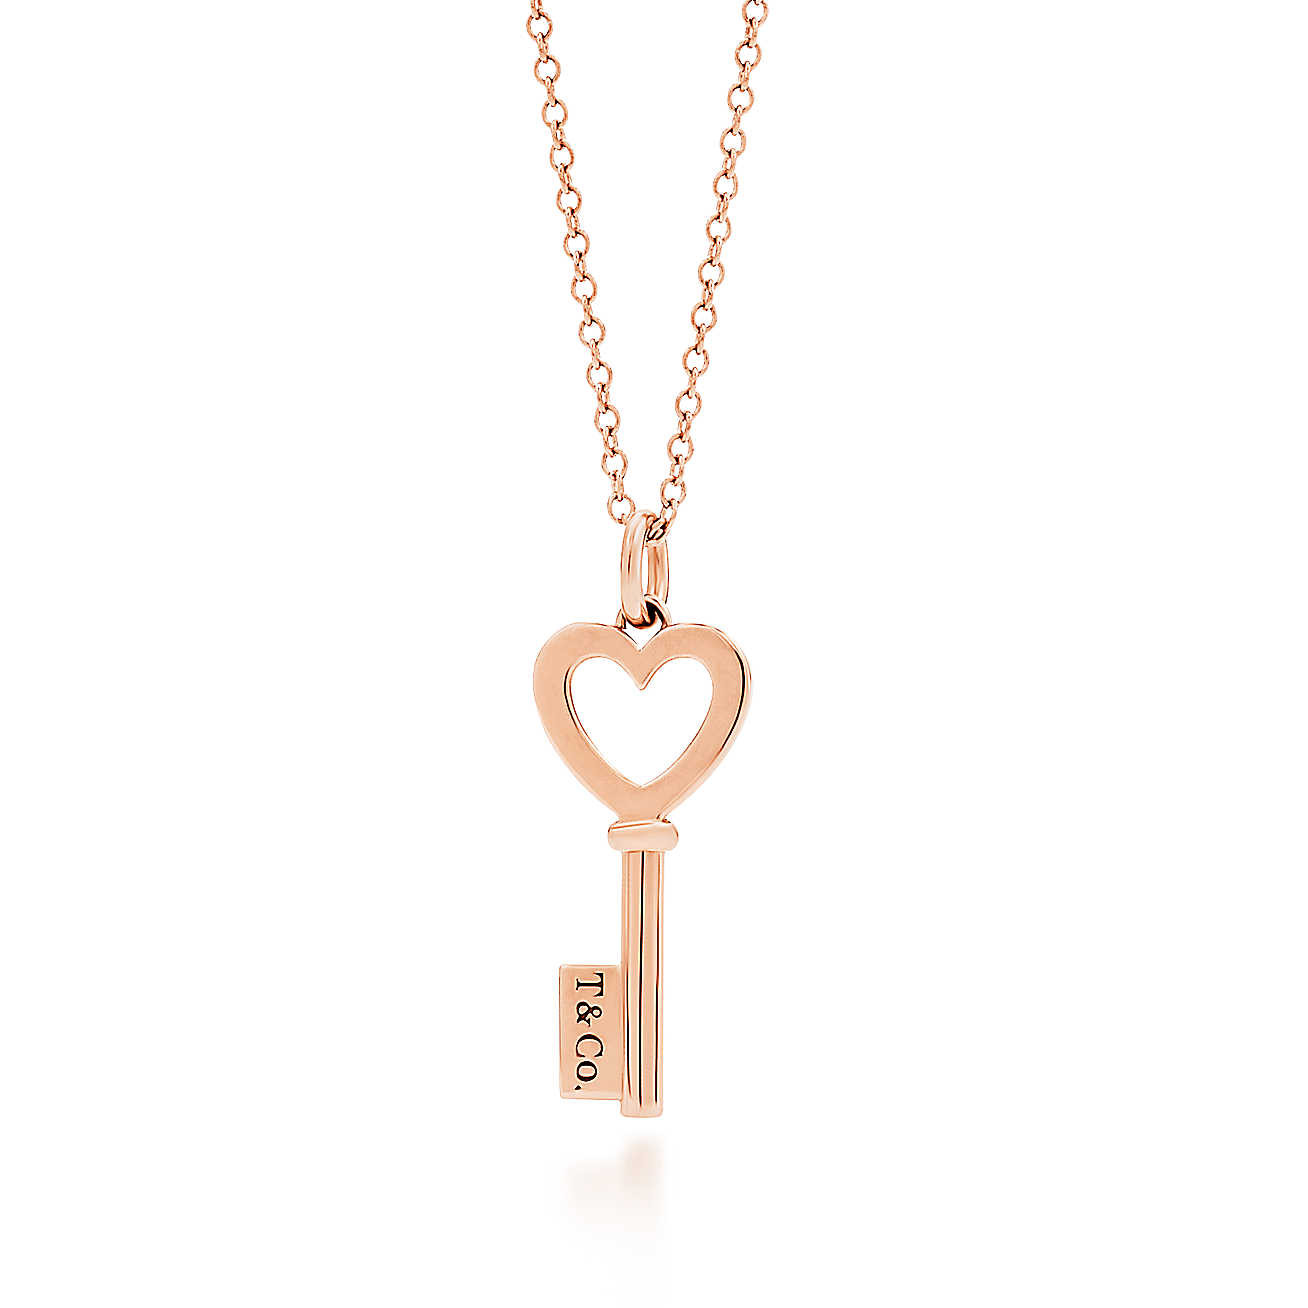 Tiffany Necklaces Under 200
 Tiffany Keys heart key pendant in 18k rose gold mini